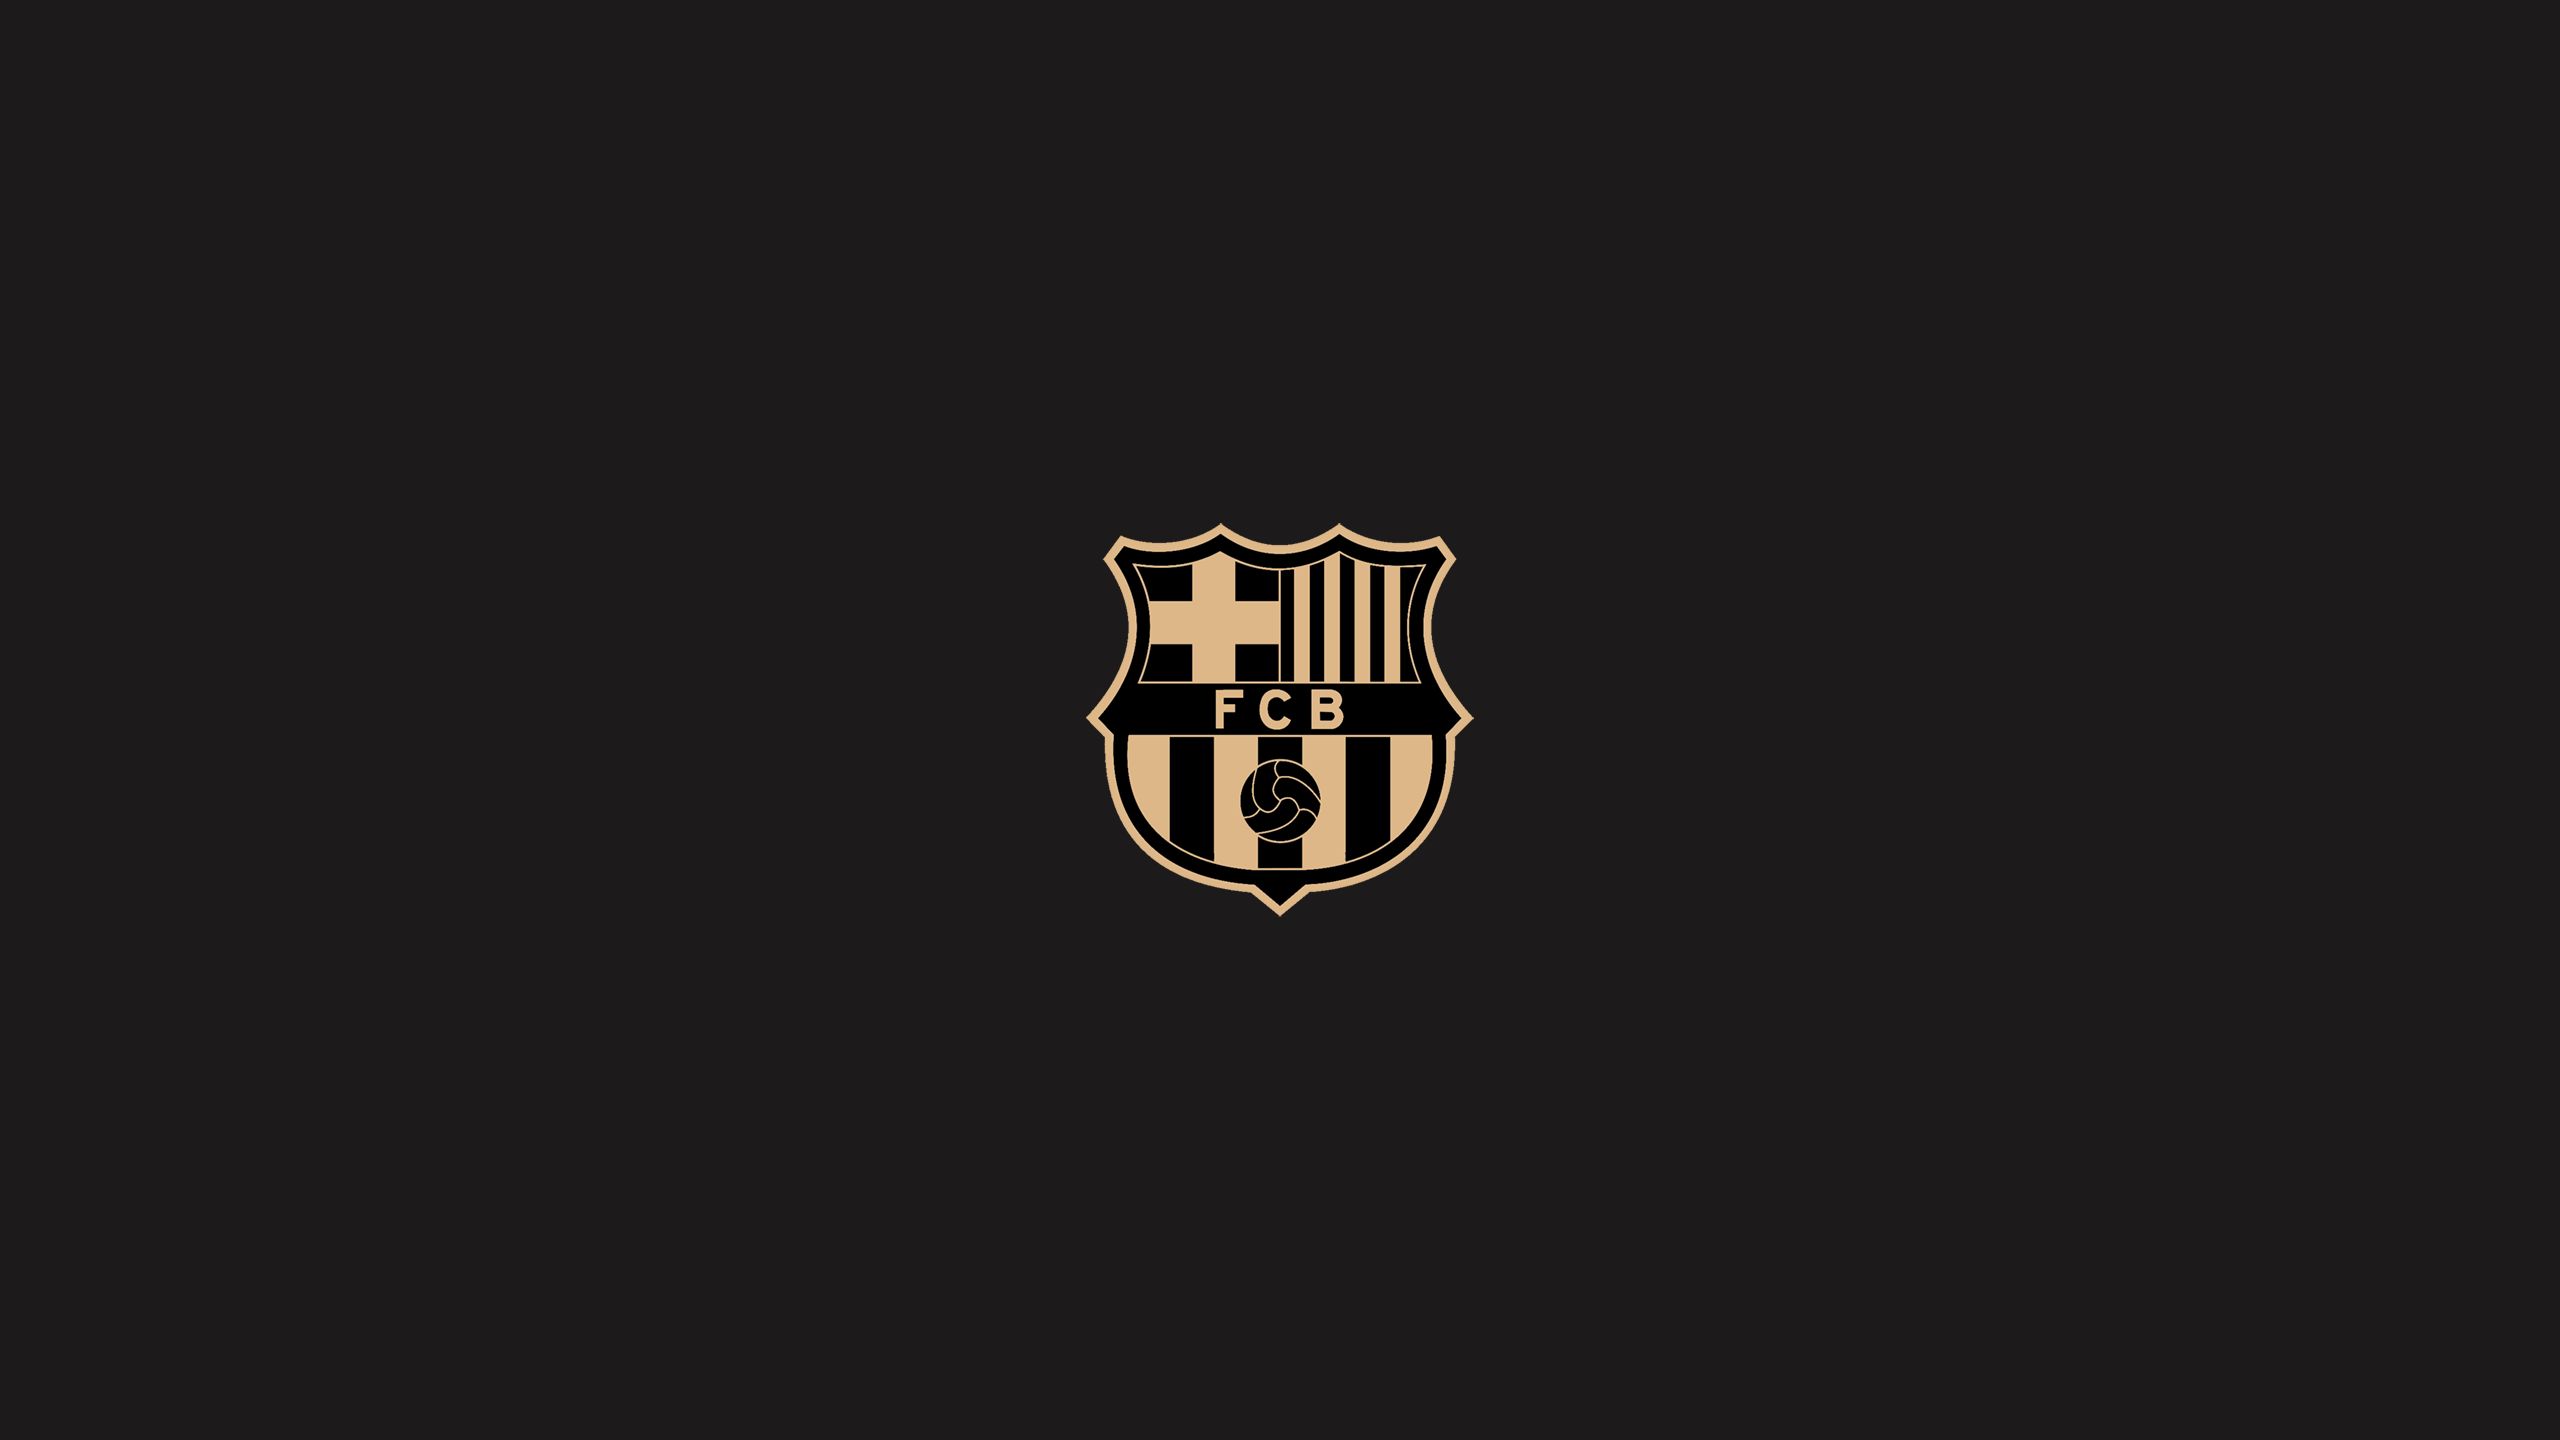 Lock Screen PC Wallpaper fc barcelona, sports, crest, emblem, logo, soccer, symbol